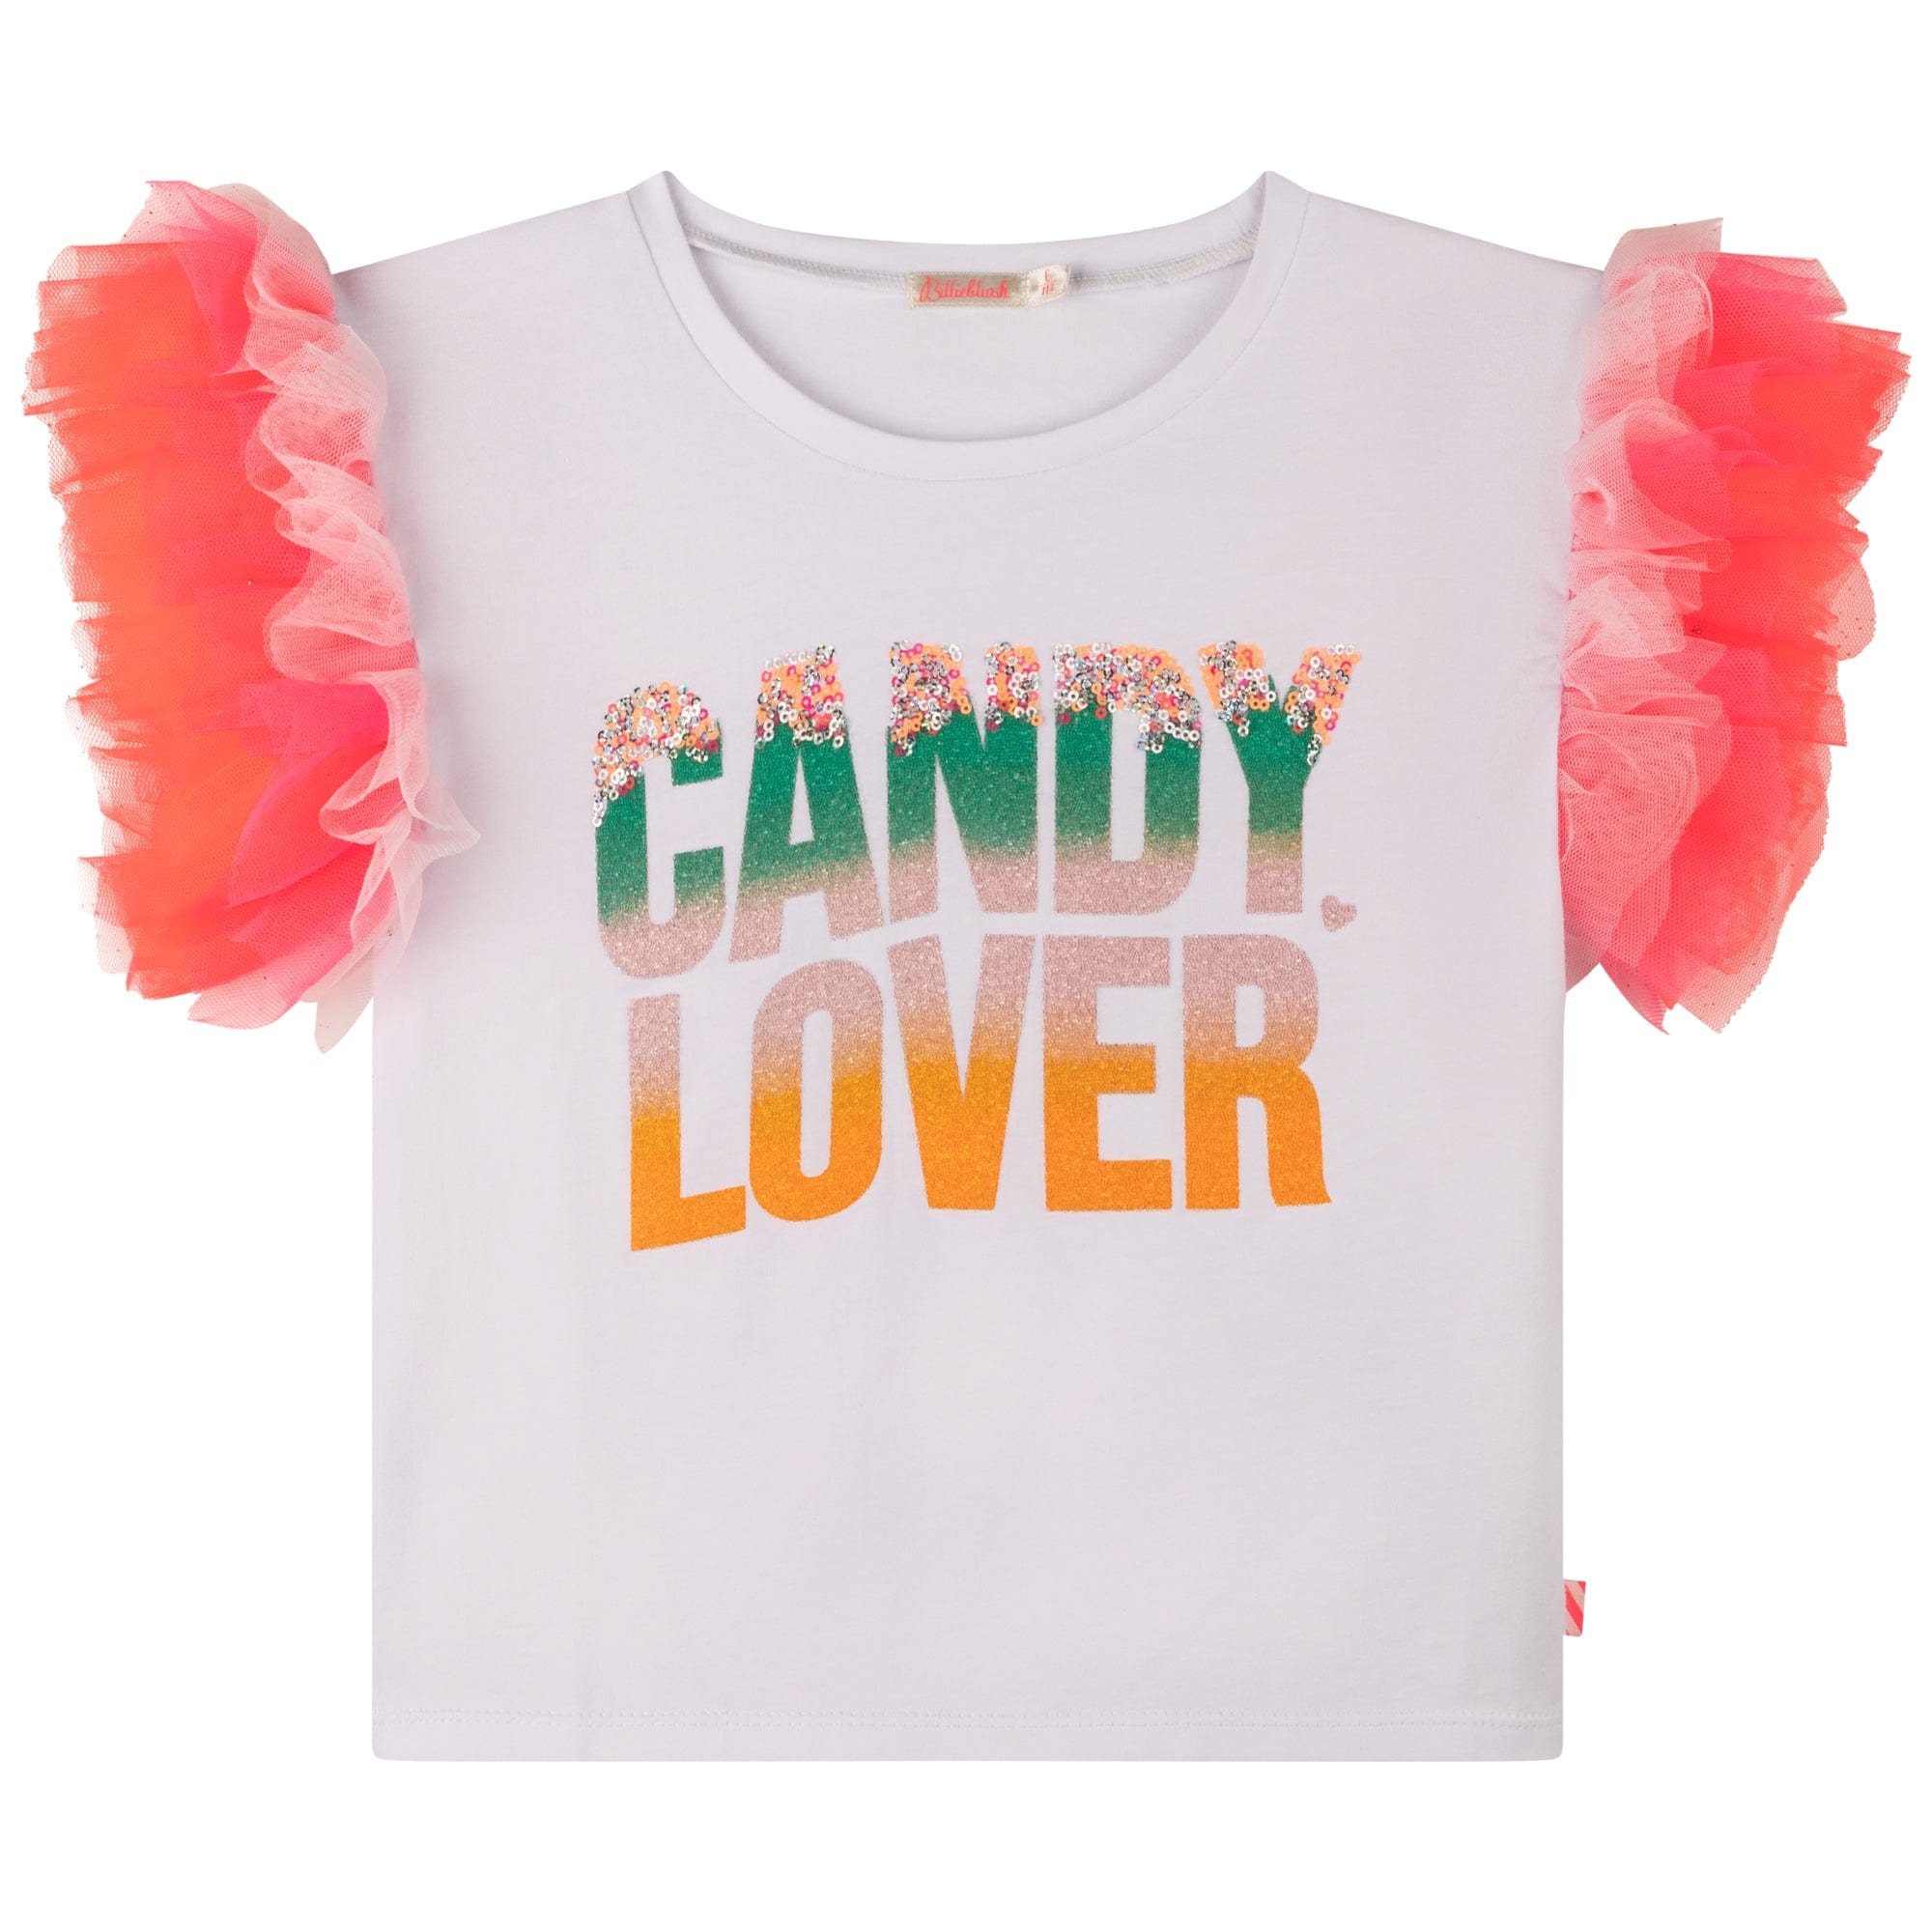 BILLIEBLUSH - Candy Lover Top & Short Set - Pink